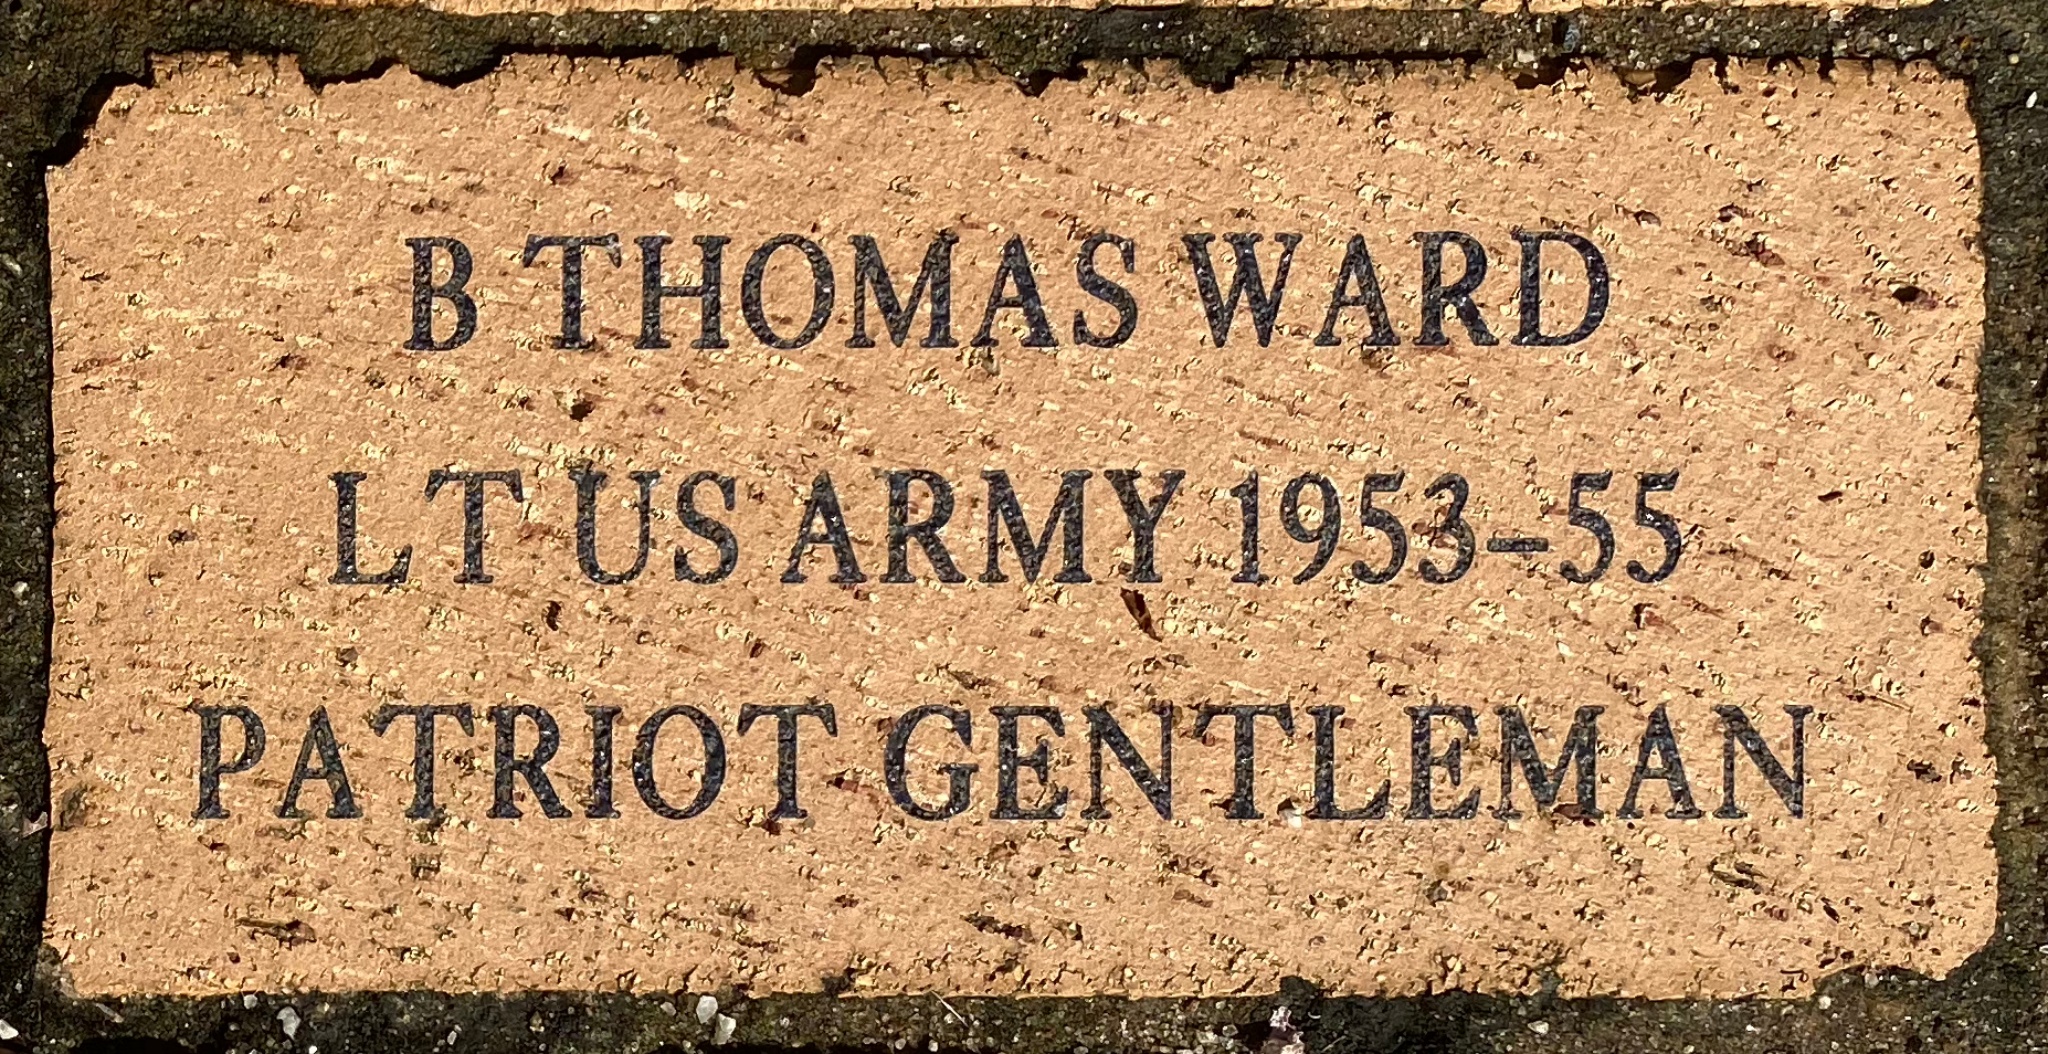 B THOMAS WARD LT US ARMY 1953-55 PATRIOT GENTLEMAN